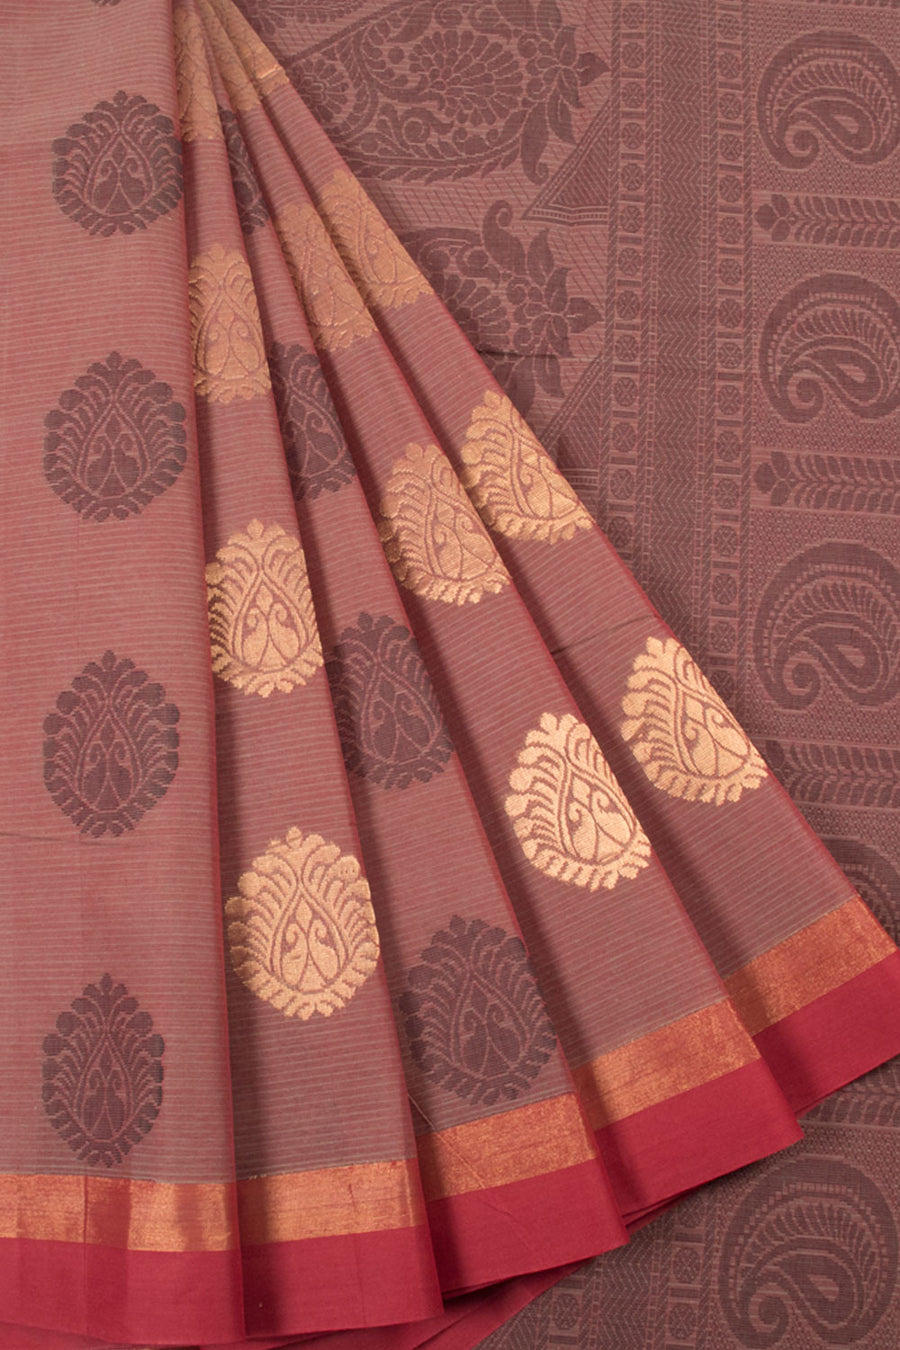 Brown Handwoven Kovai Cotton Saree with Floral Motifs, Stripes Design and Zari Border